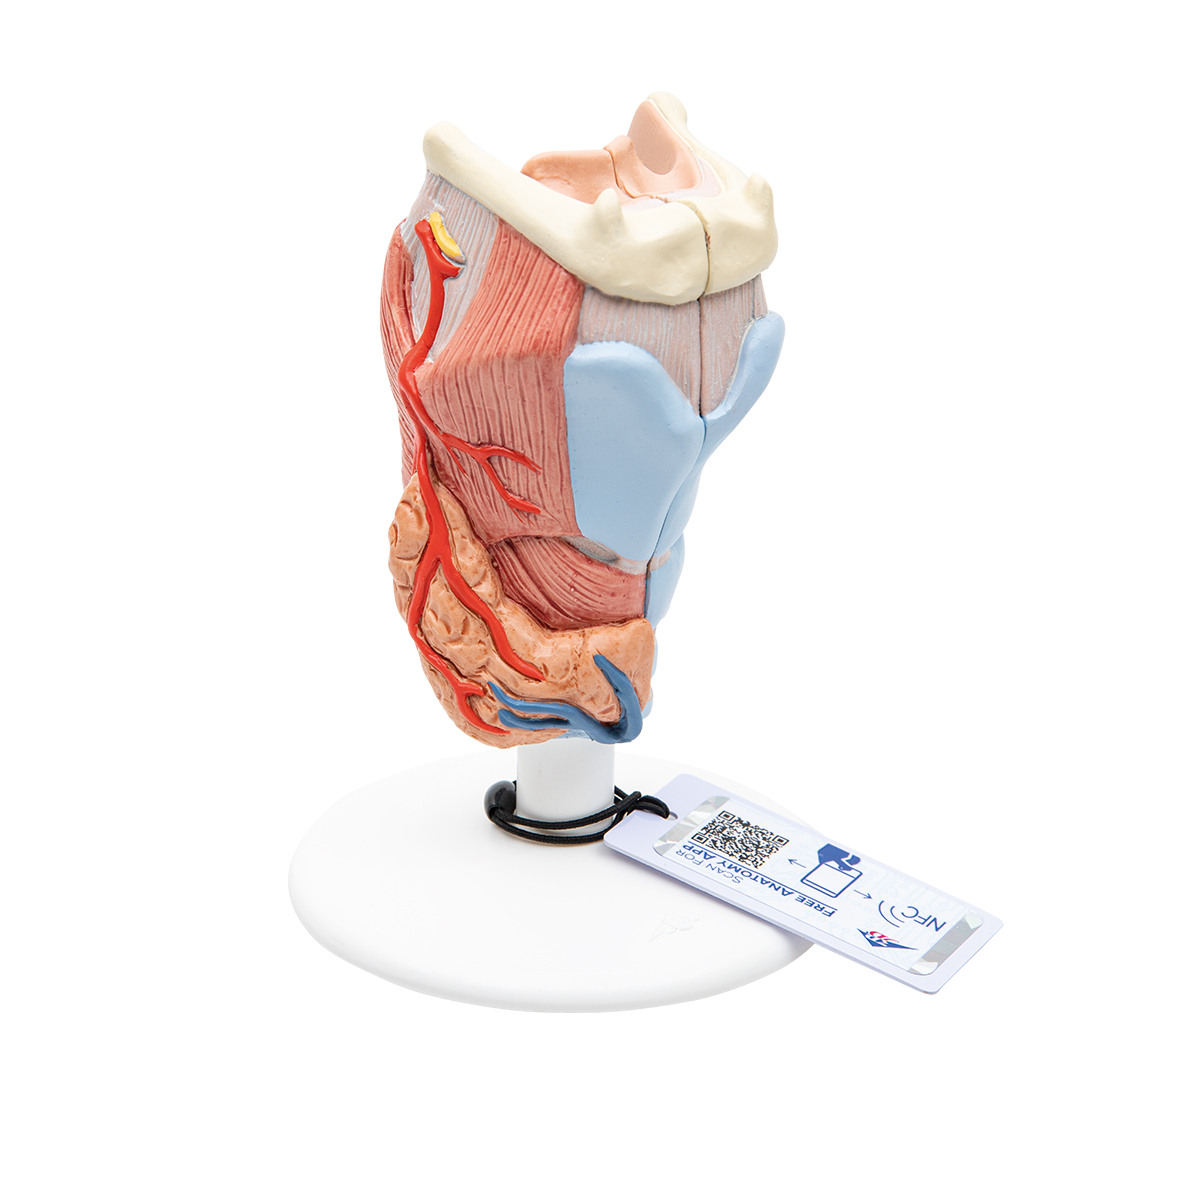 Kehlkopfmodell, 2-teilig - 3B Smart Anatomy, Bestellnummer 1000273, G22, 3B Scientific